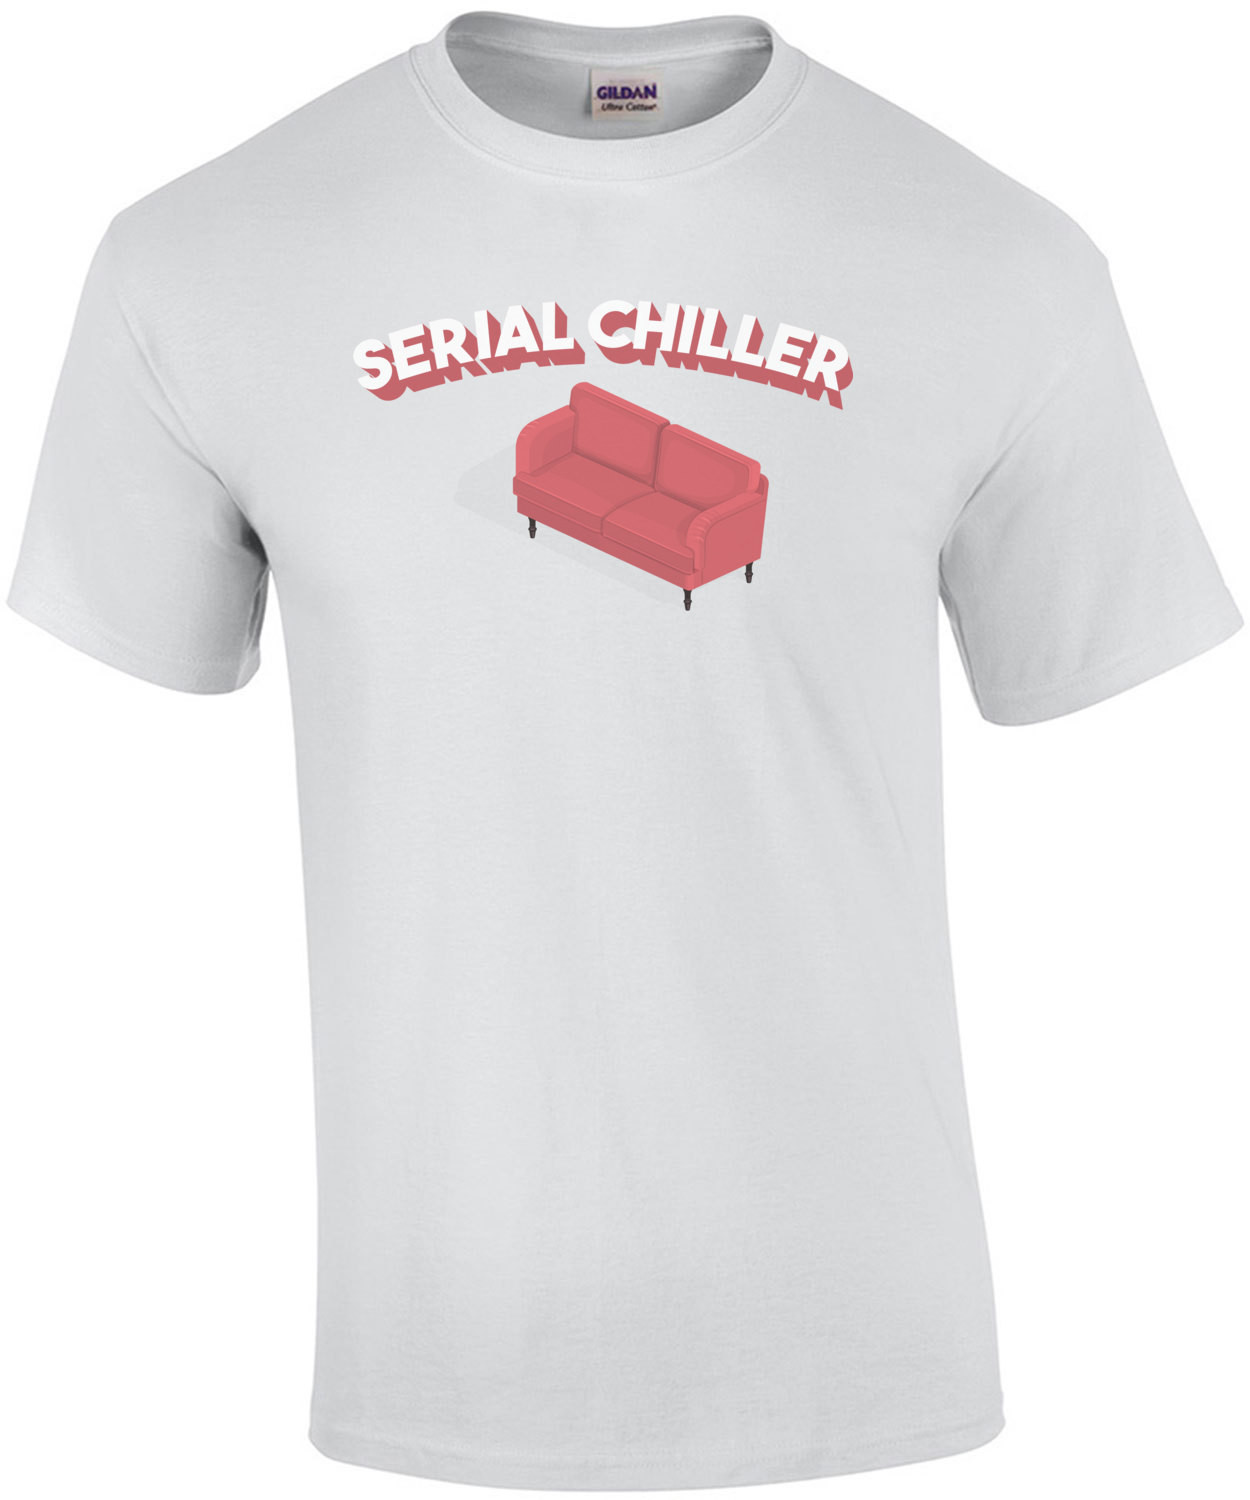 Serial Chiller - Funny T-Shirt